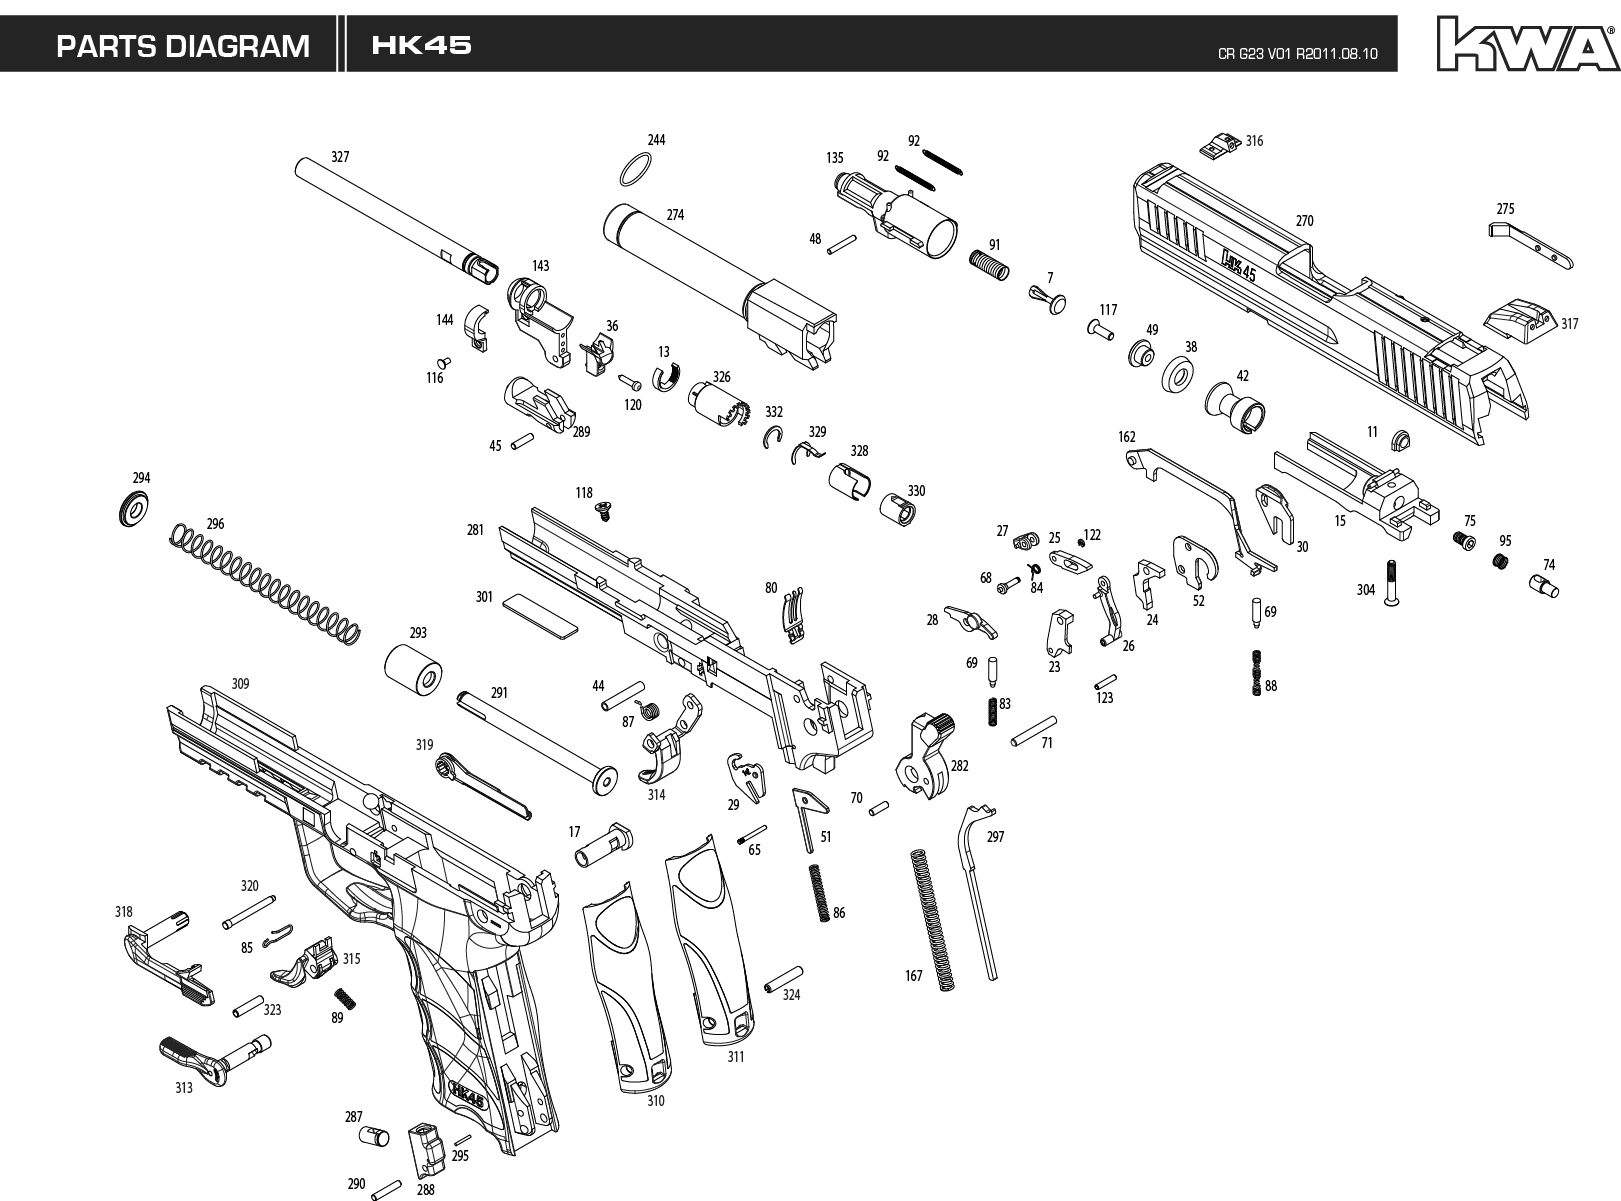 Hk45 Kwa Parts Pistol Diagram Manual Hk Drawing Airsoft Gun Explosion Gas E...